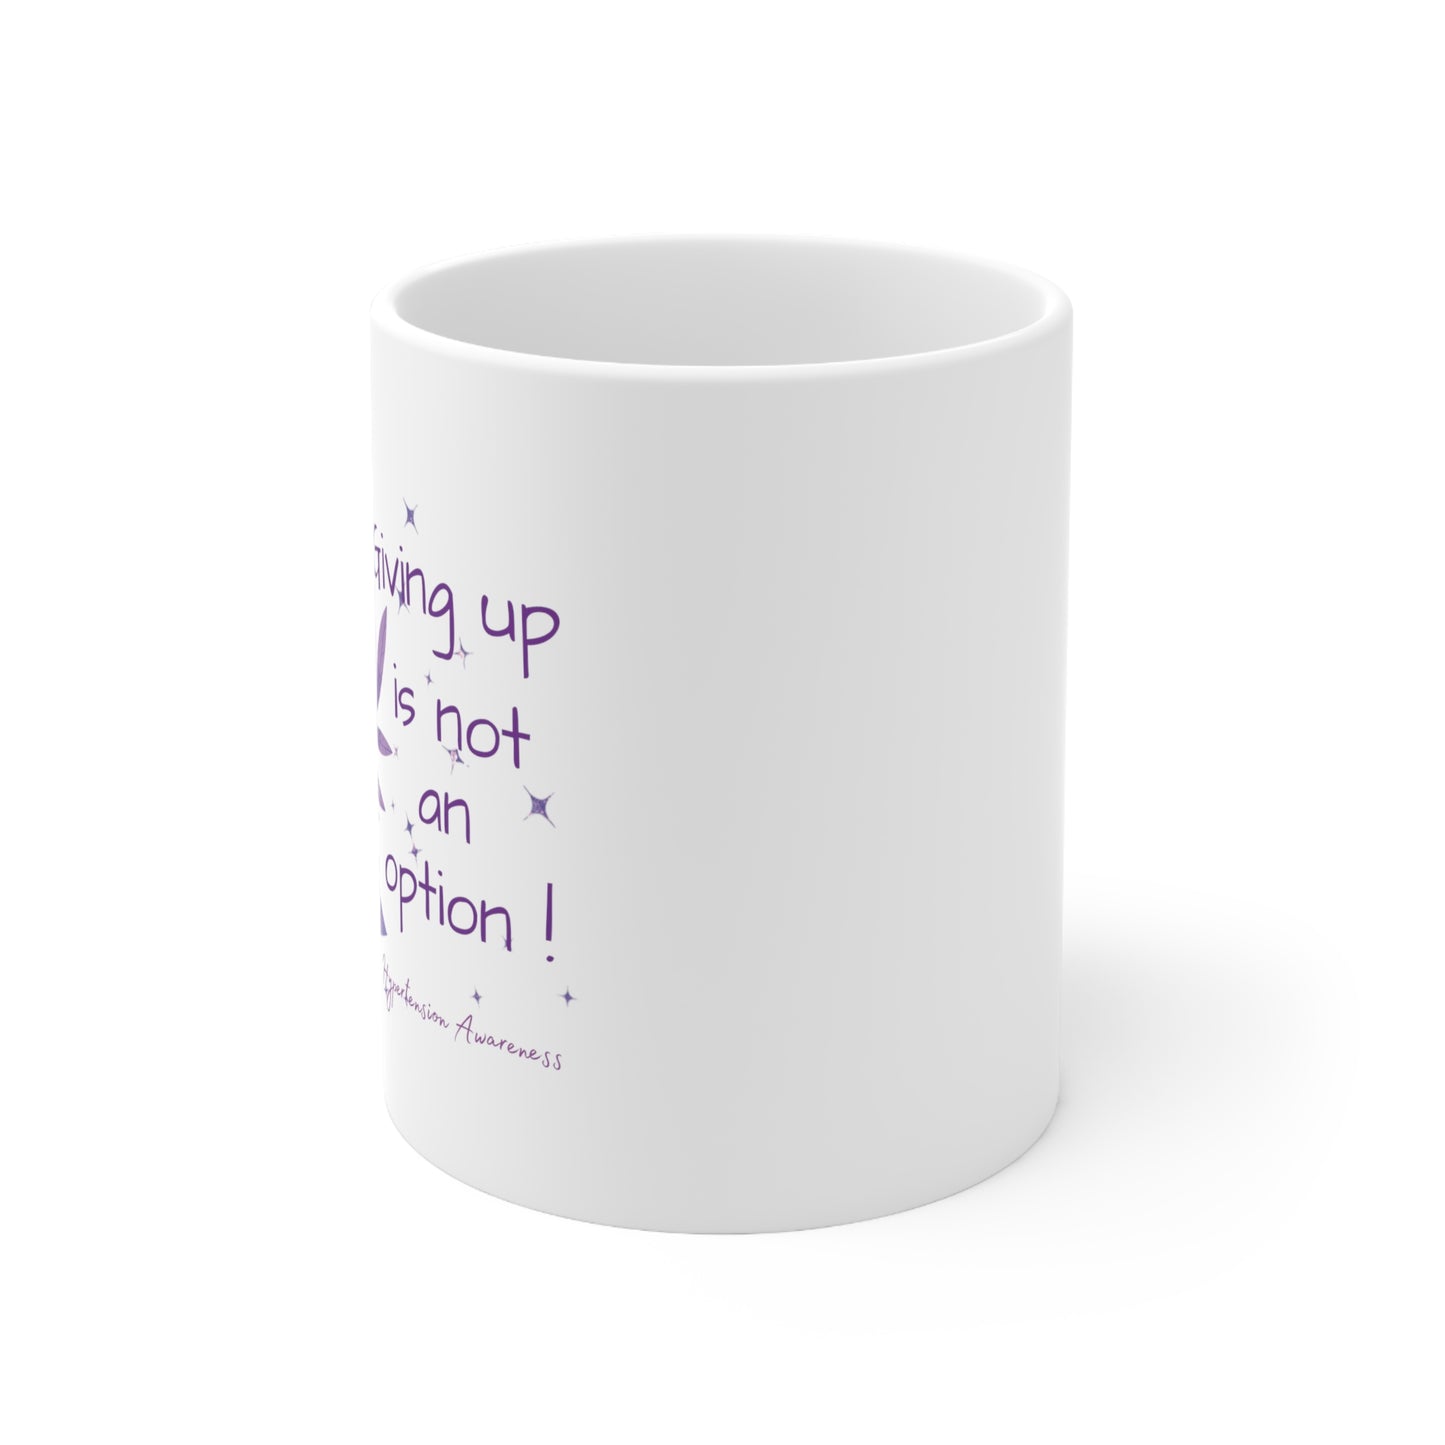 PH- Giving Up Is Not An Option - Ceramic Mug 11oz